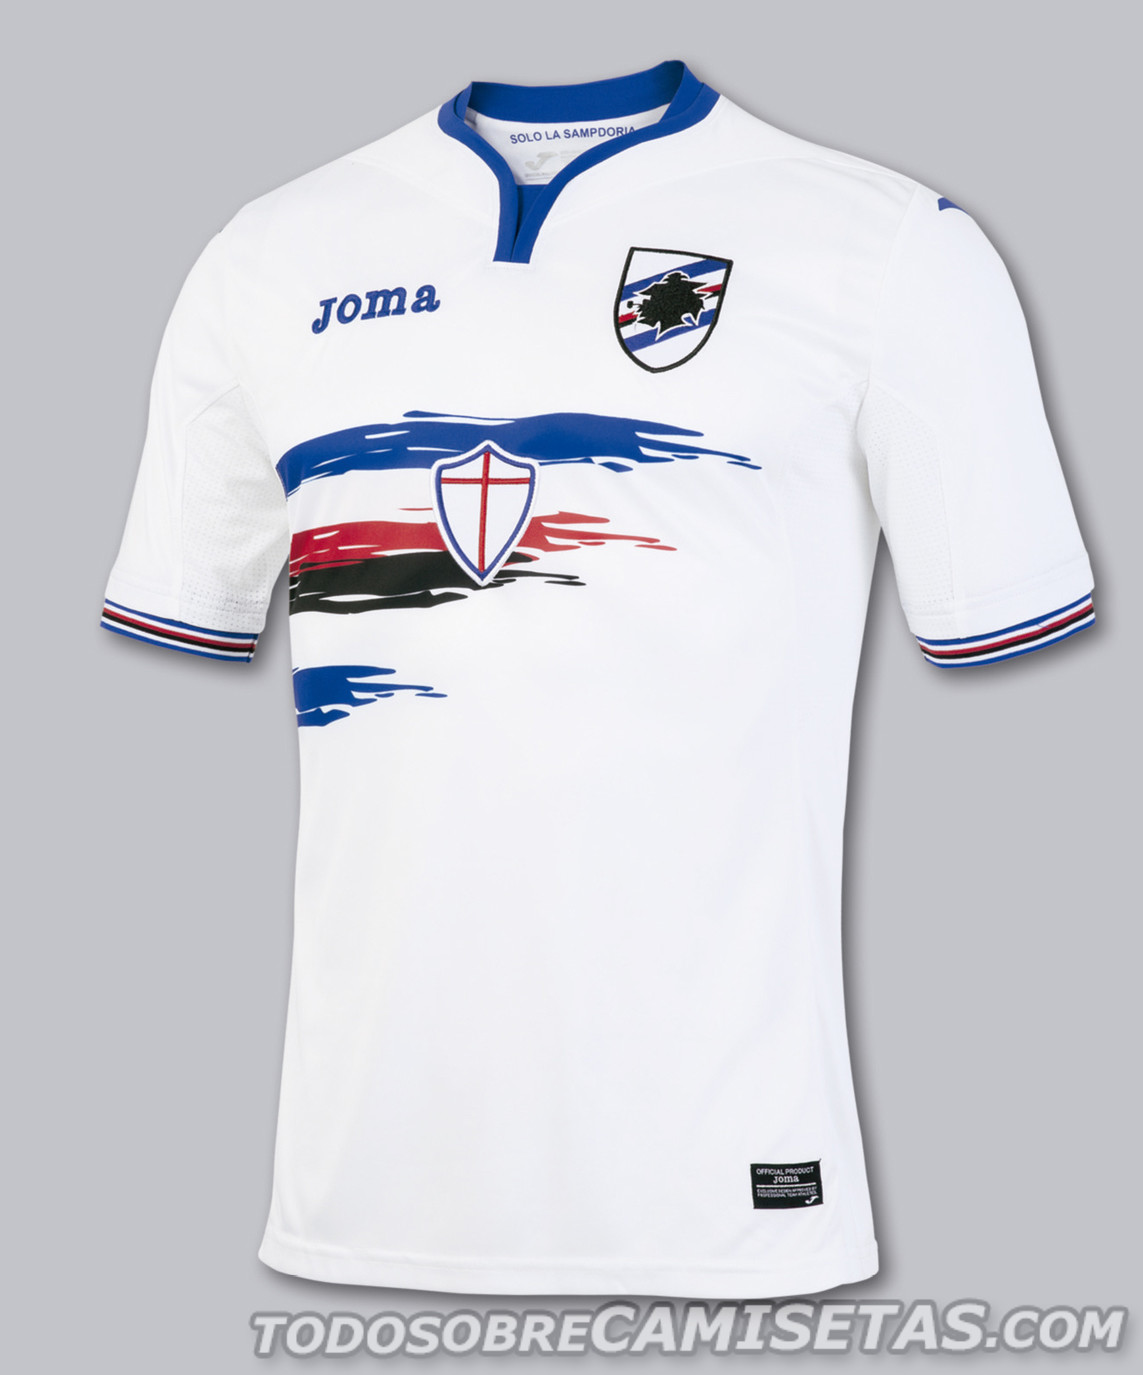 Sampdoria Joma 2016-17 Kits - Todo Sobre Camisetas